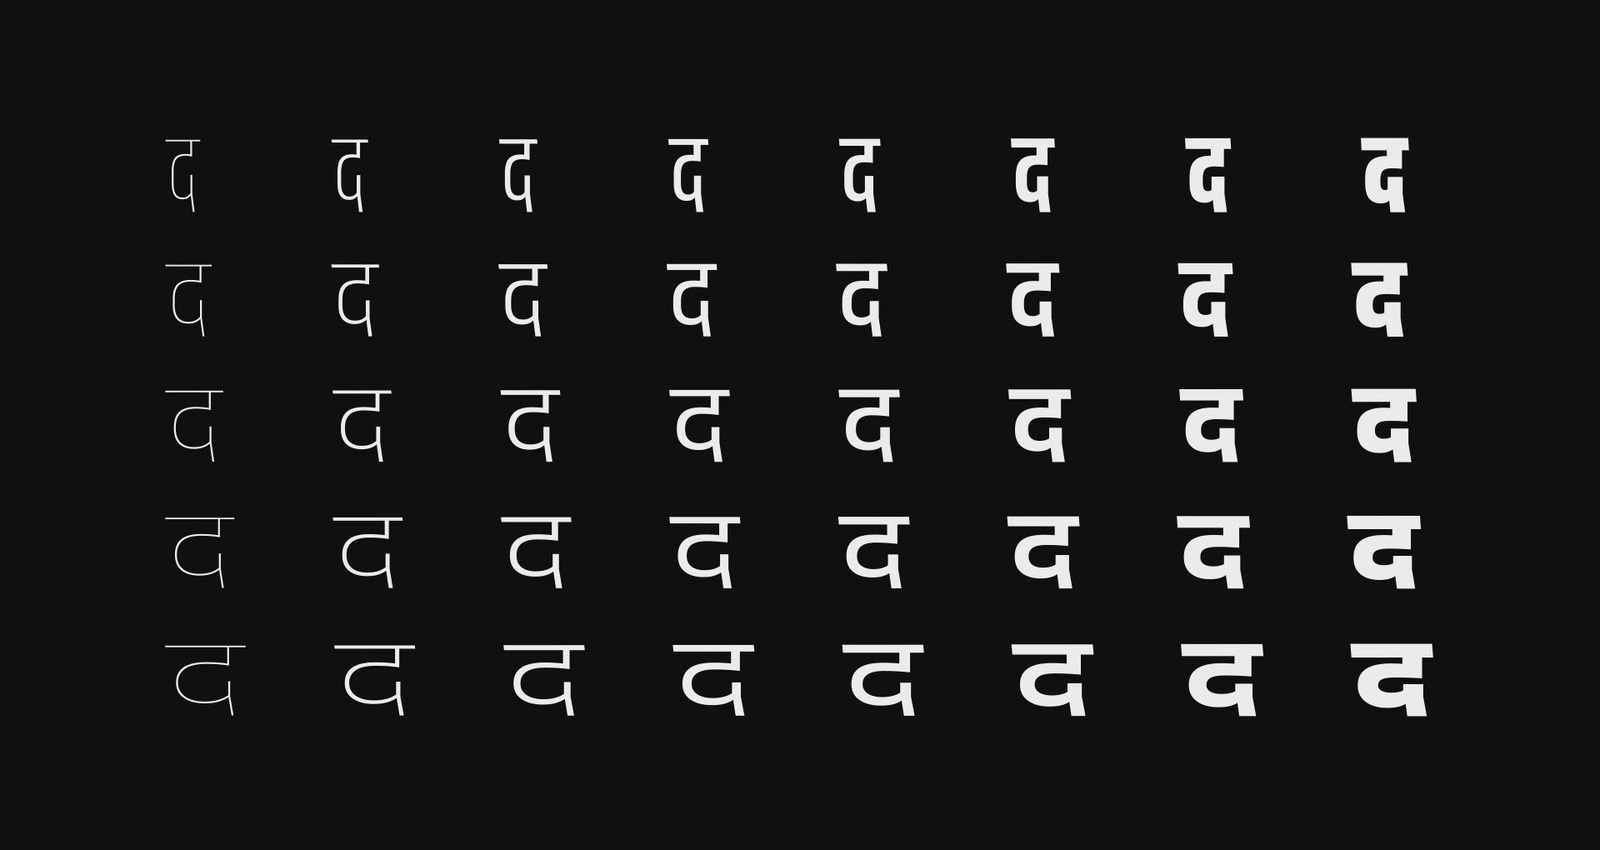 ANEK - Multi-script Variable Indic Type Family